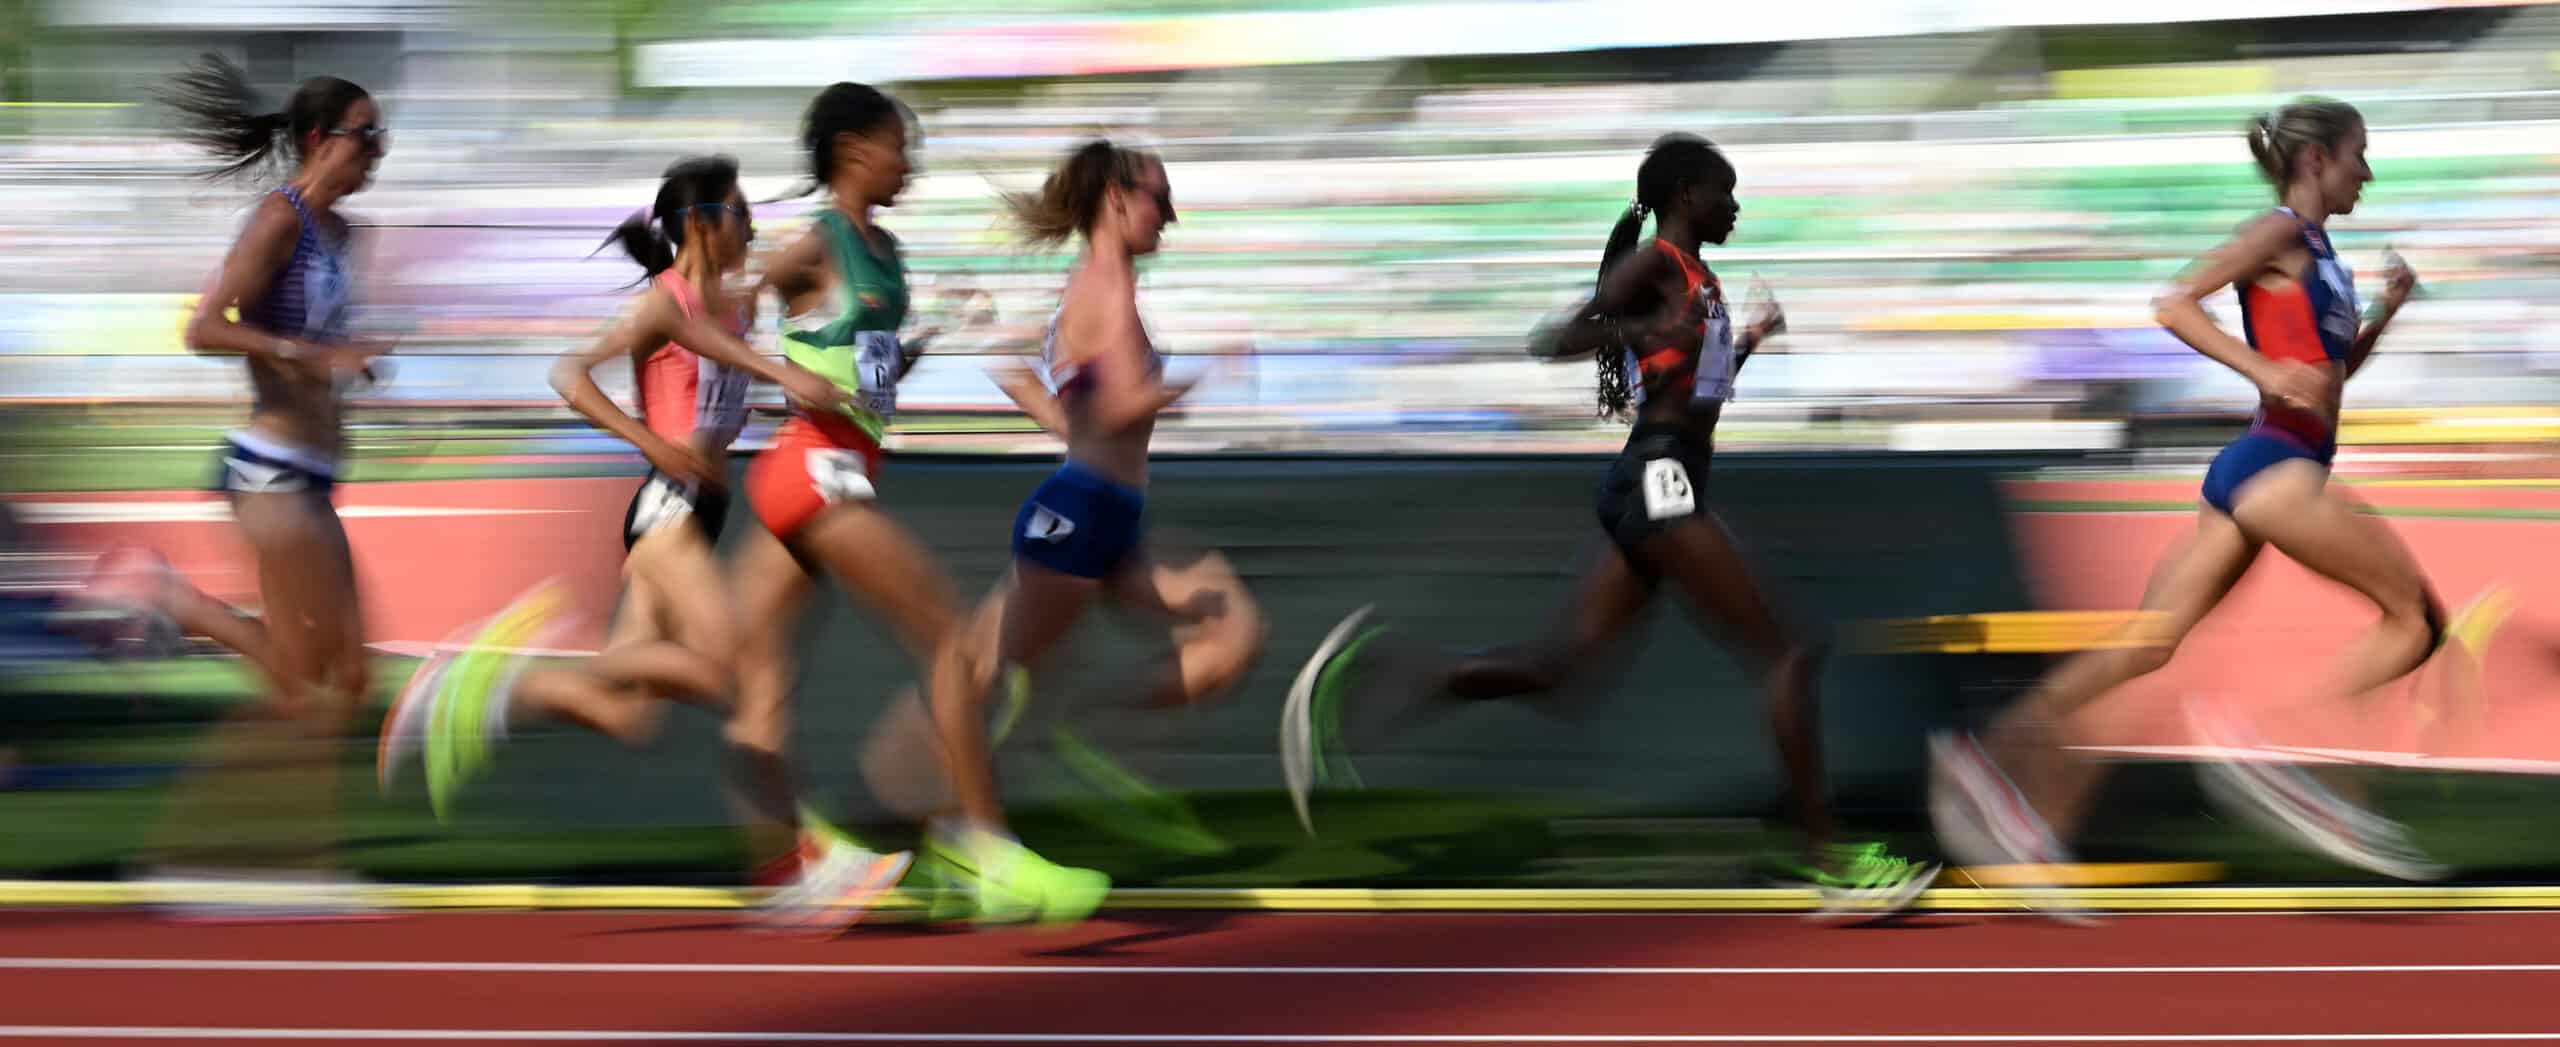 Women athletes running on track